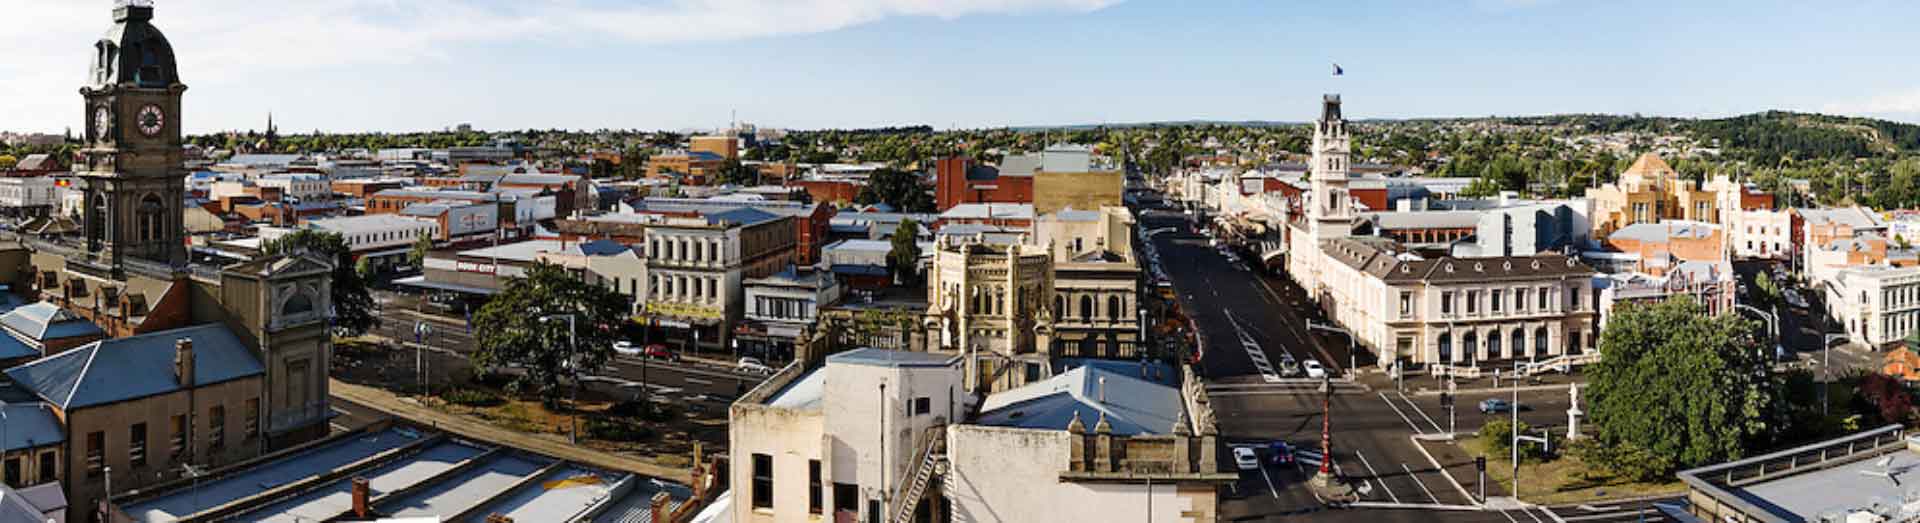 PureSmile - Teeth Whitening Ballarat - City View